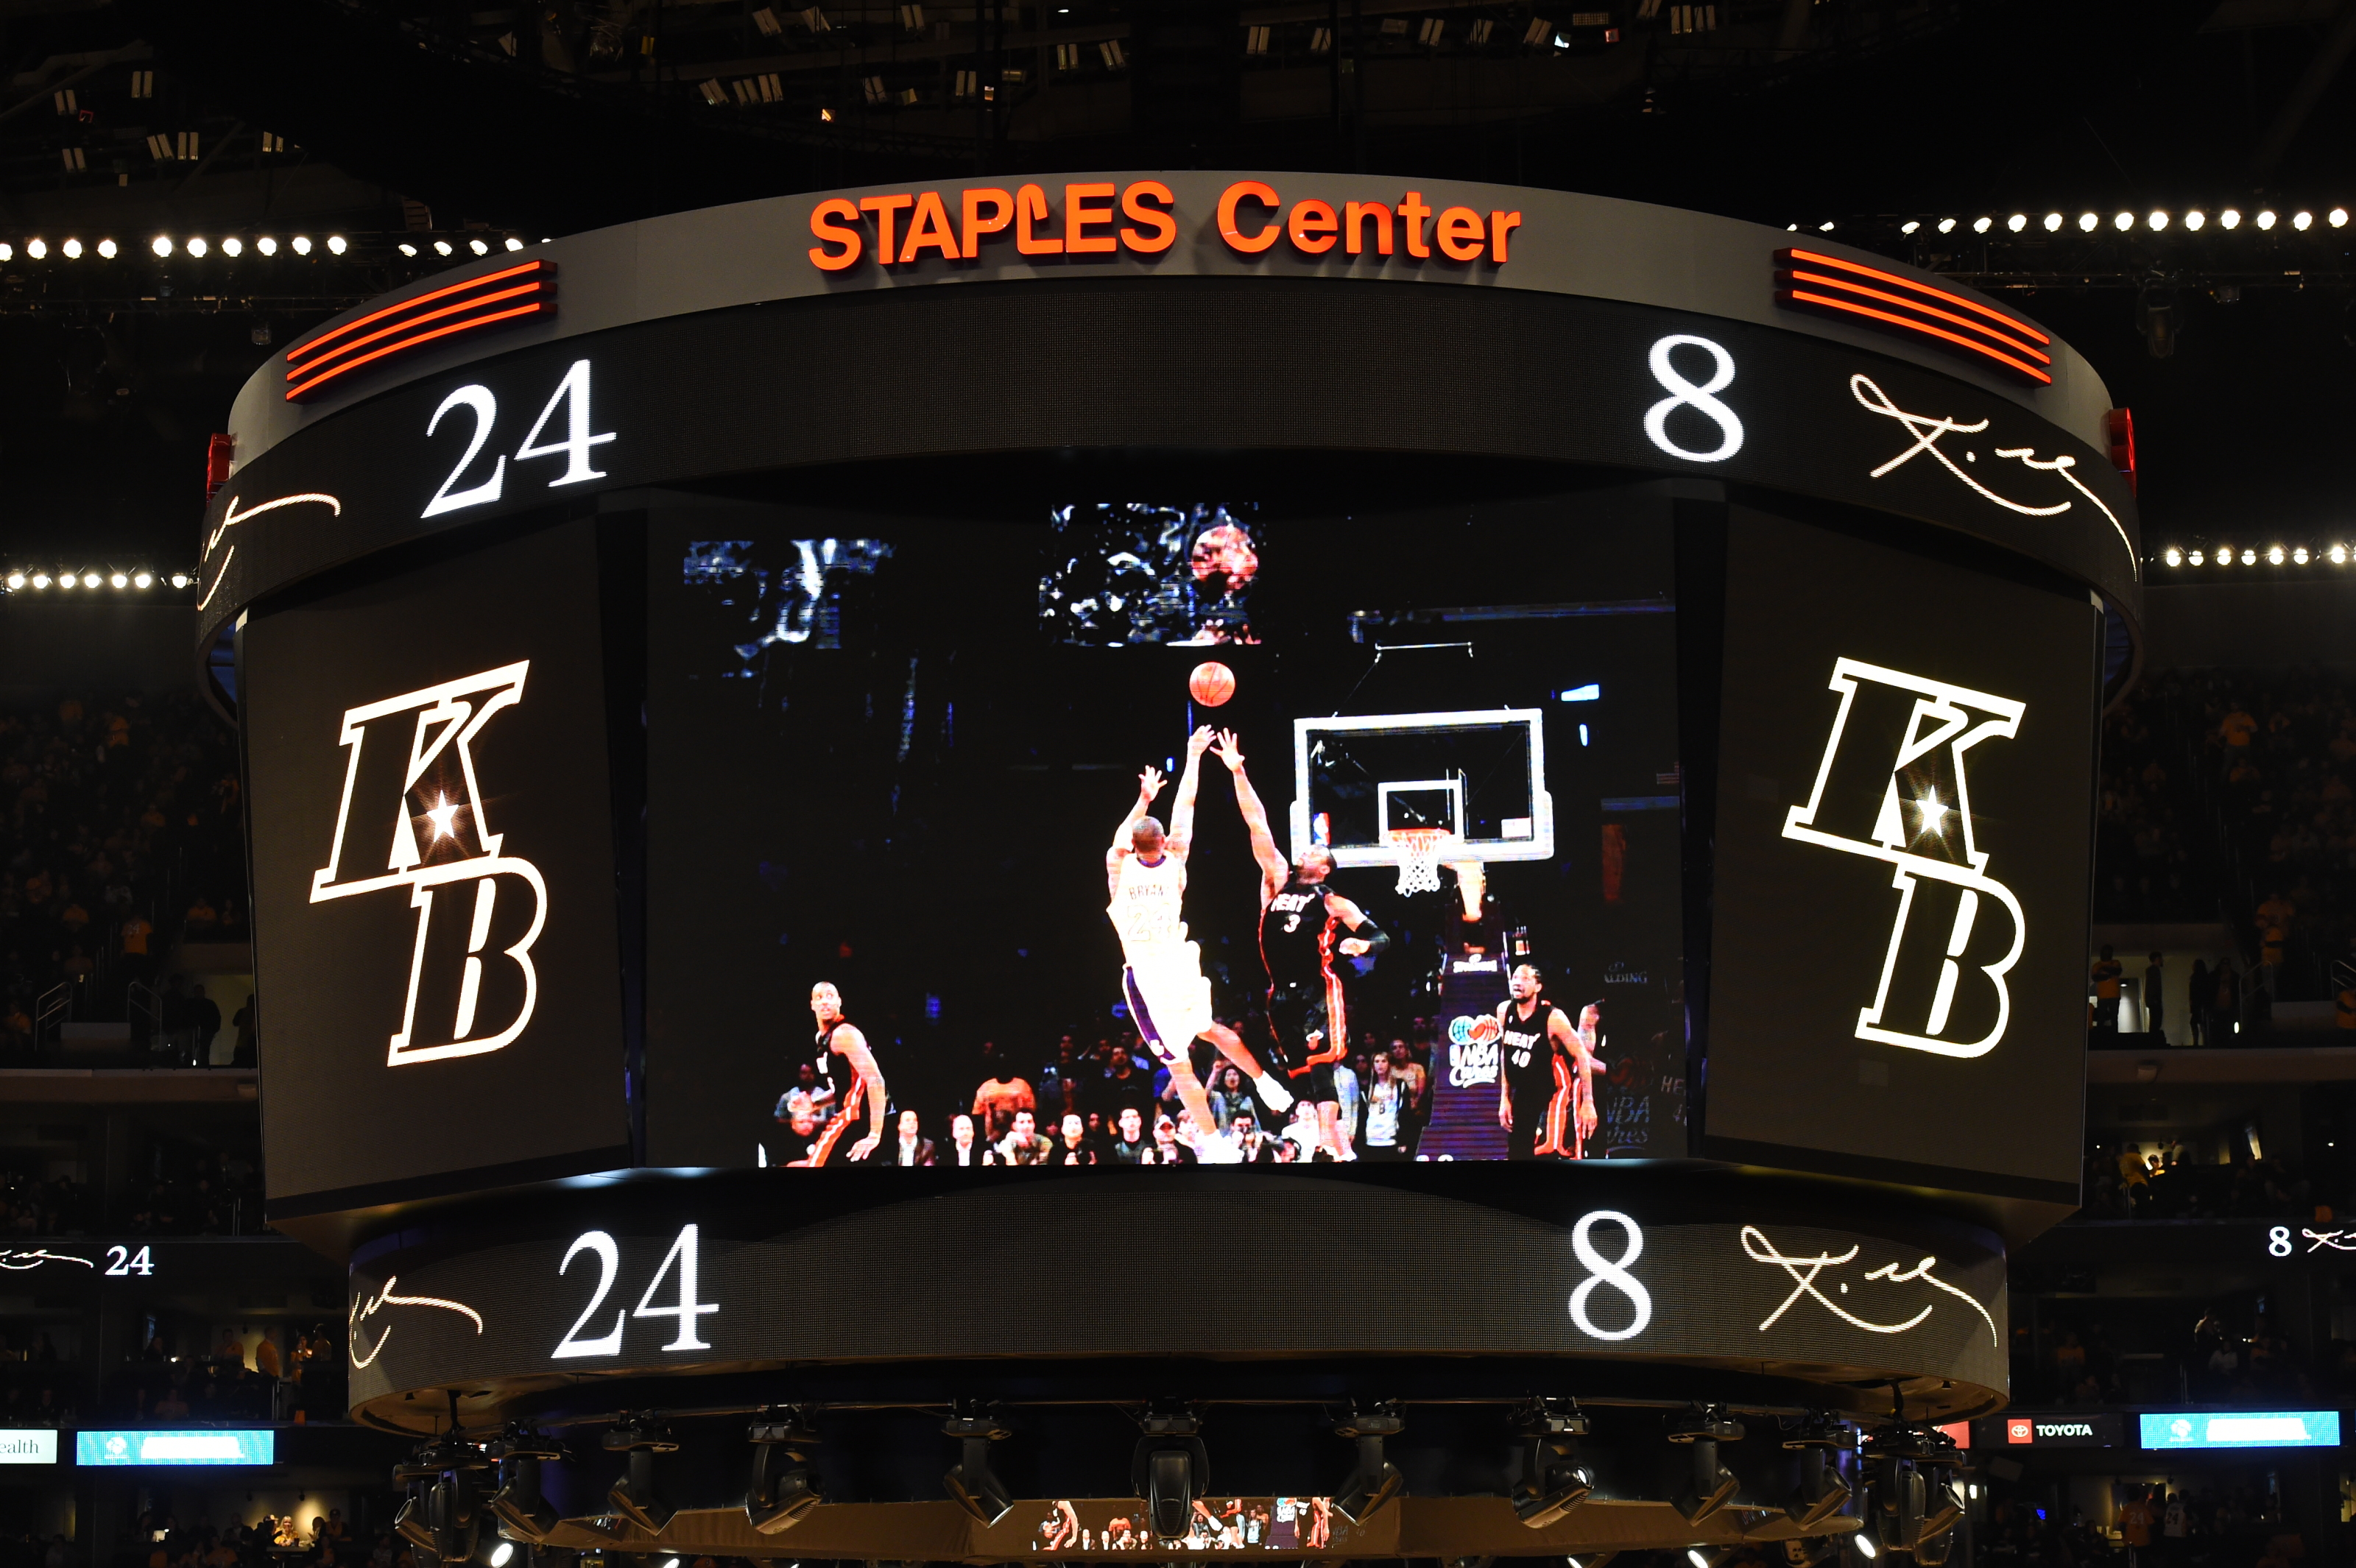 Laker scoreboard at Staples Center, Los Angeles